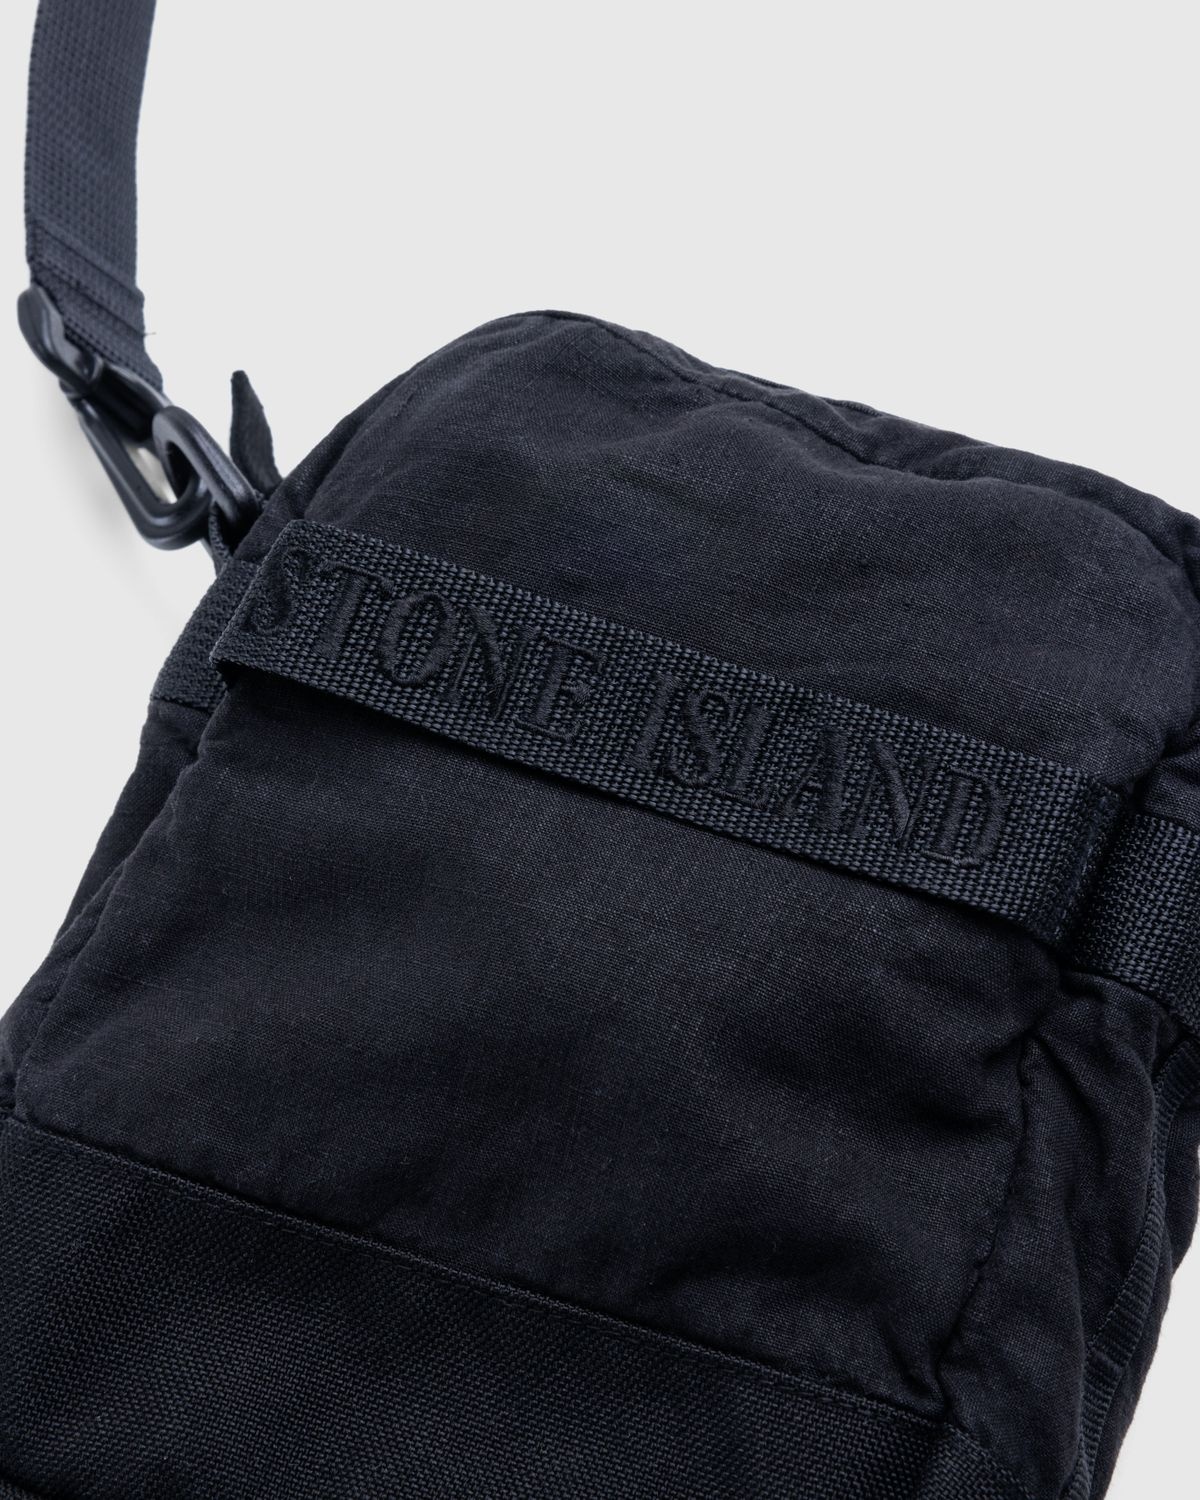 Stone Island – Crossbody Bag Black - 4